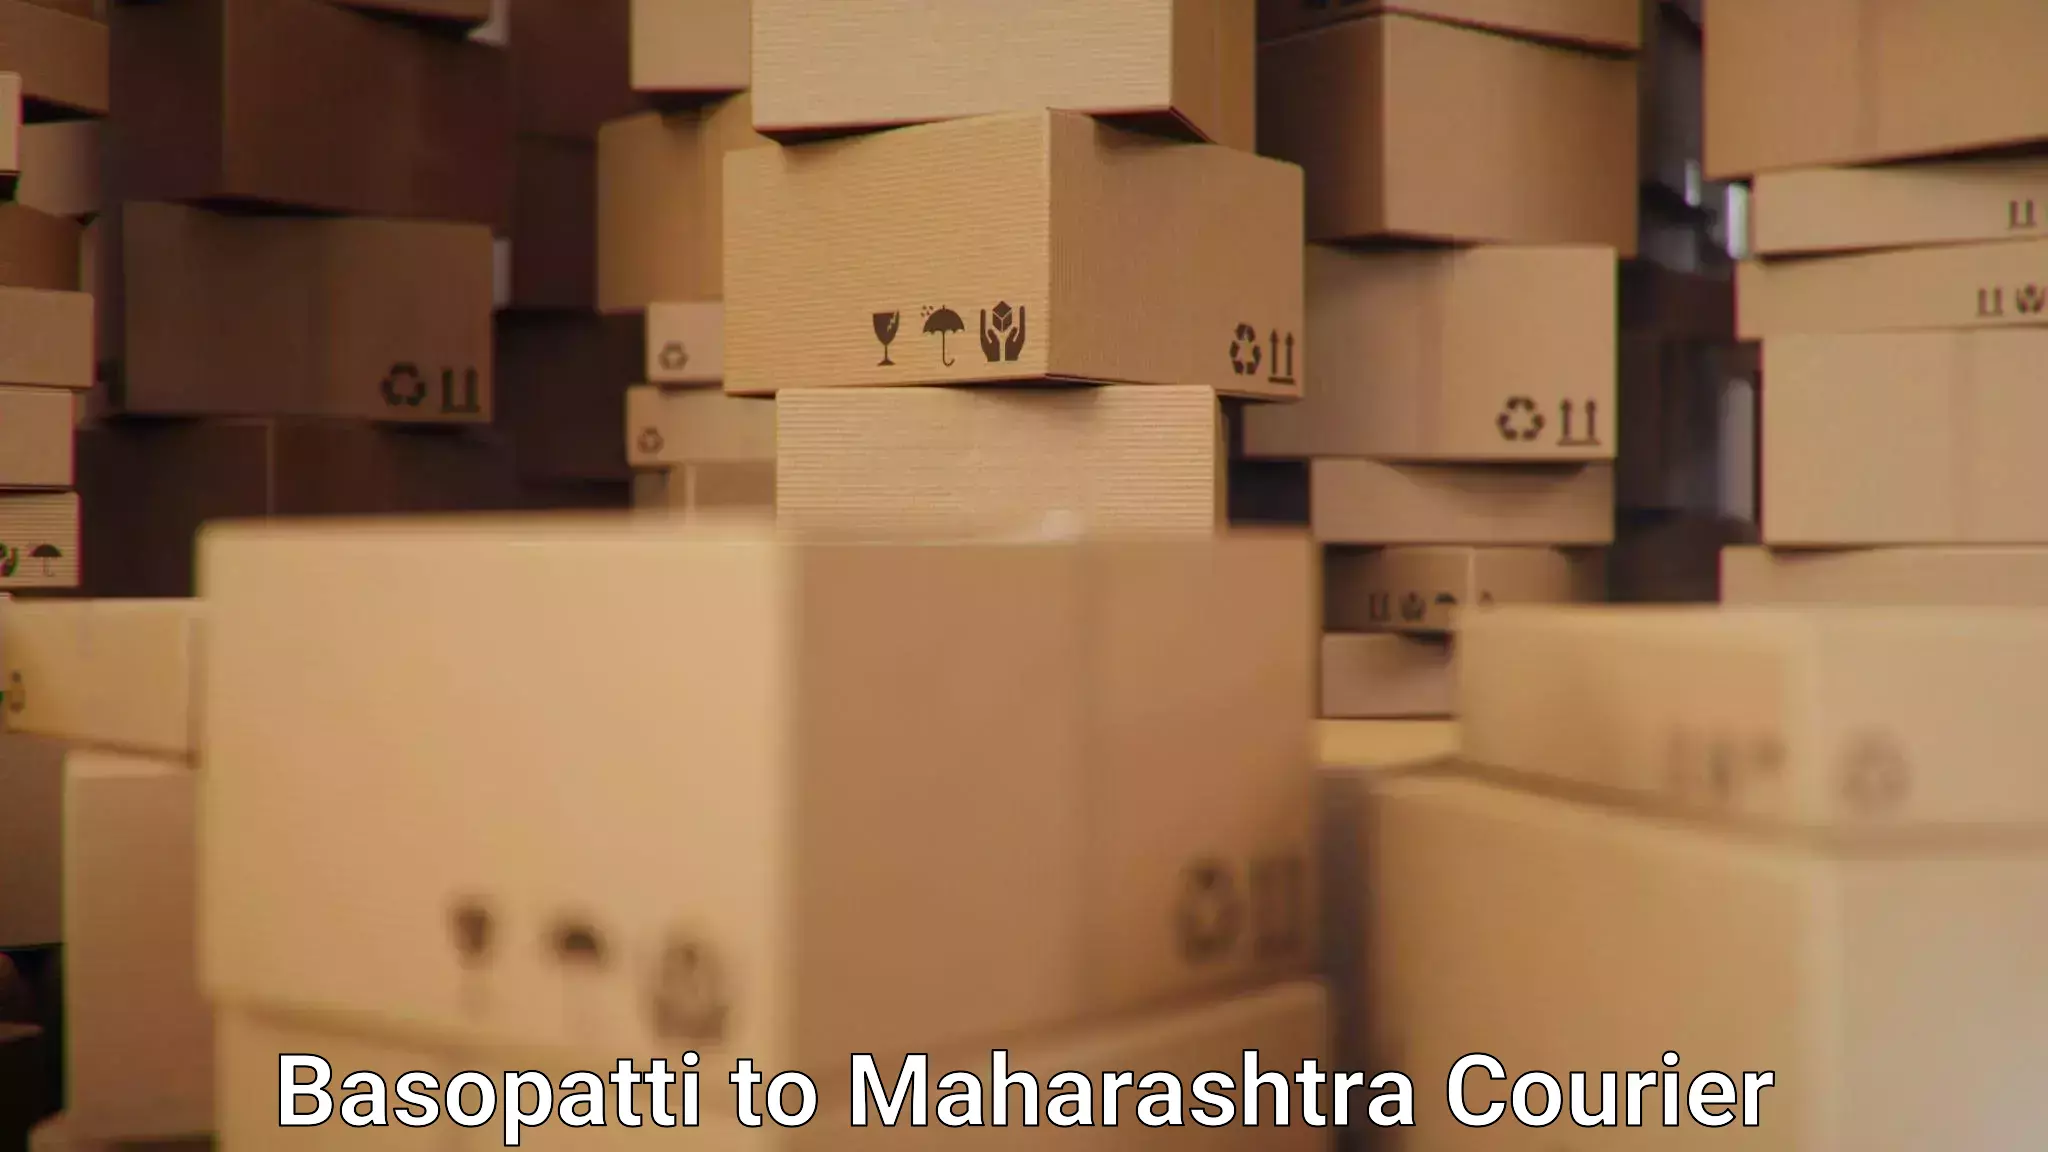 24-hour courier service Basopatti to Navi Mumbai